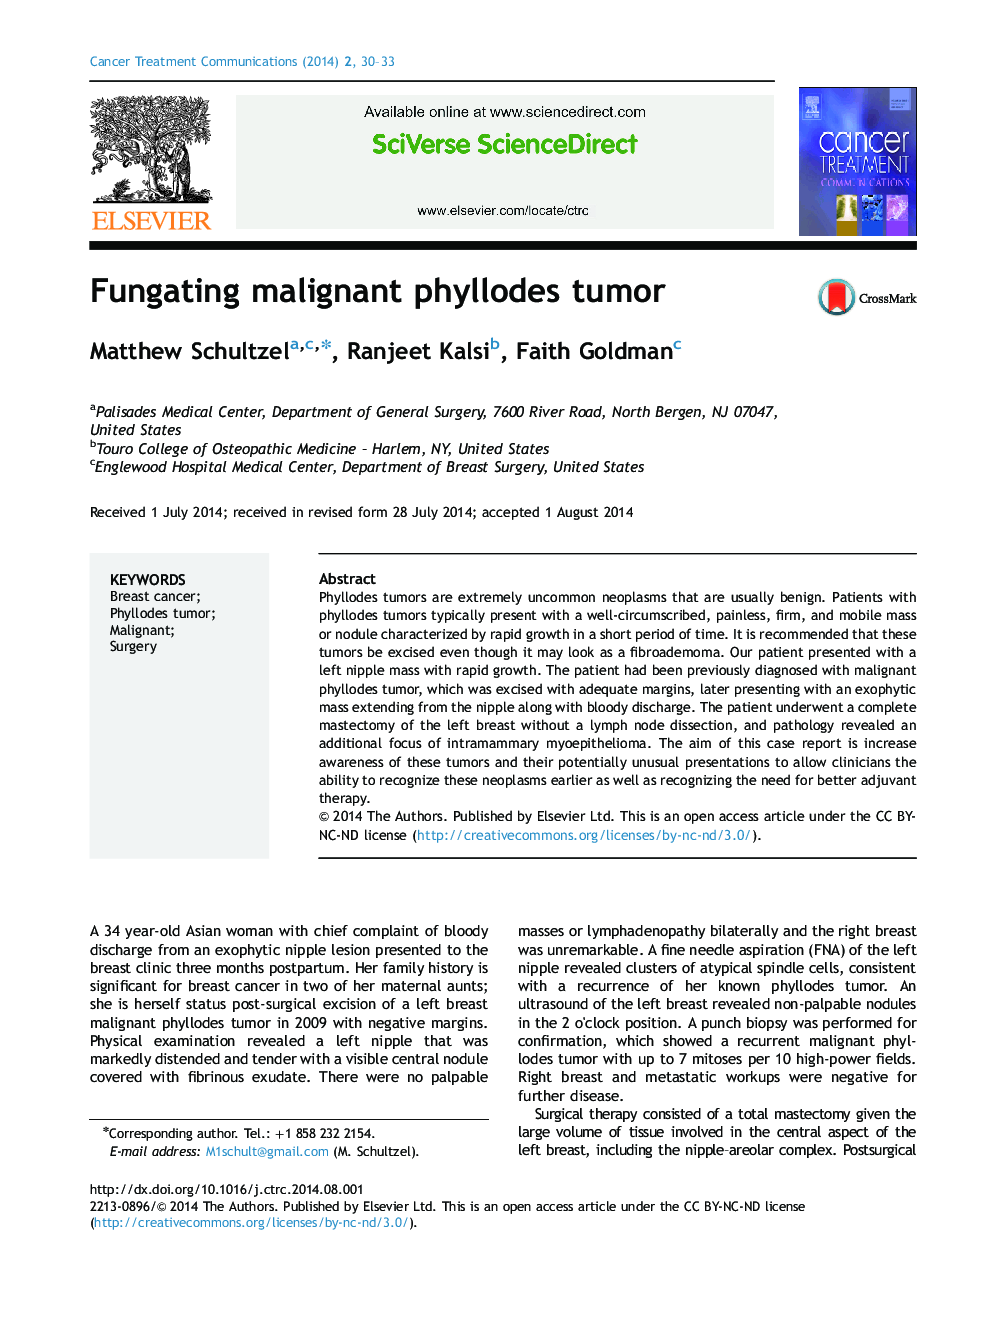 Fungating malignant phyllodes tumor